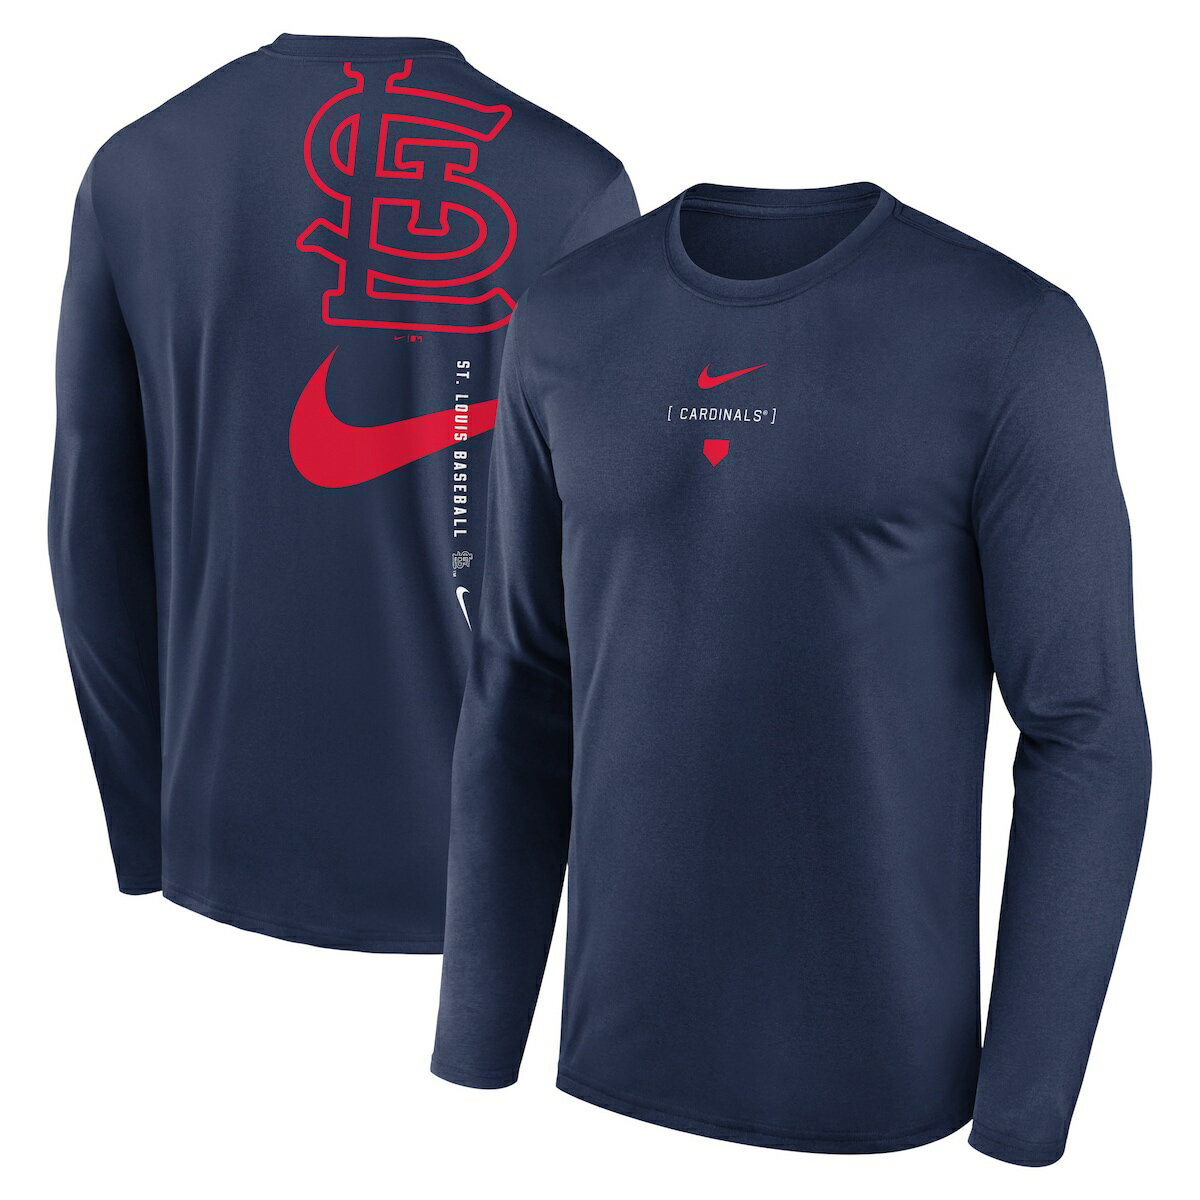 MLB カージナルス Tシャツ Nike ナイキ メンズ ネイビー (Men's Nike Large Swoosh Back Legend Tee SP24)